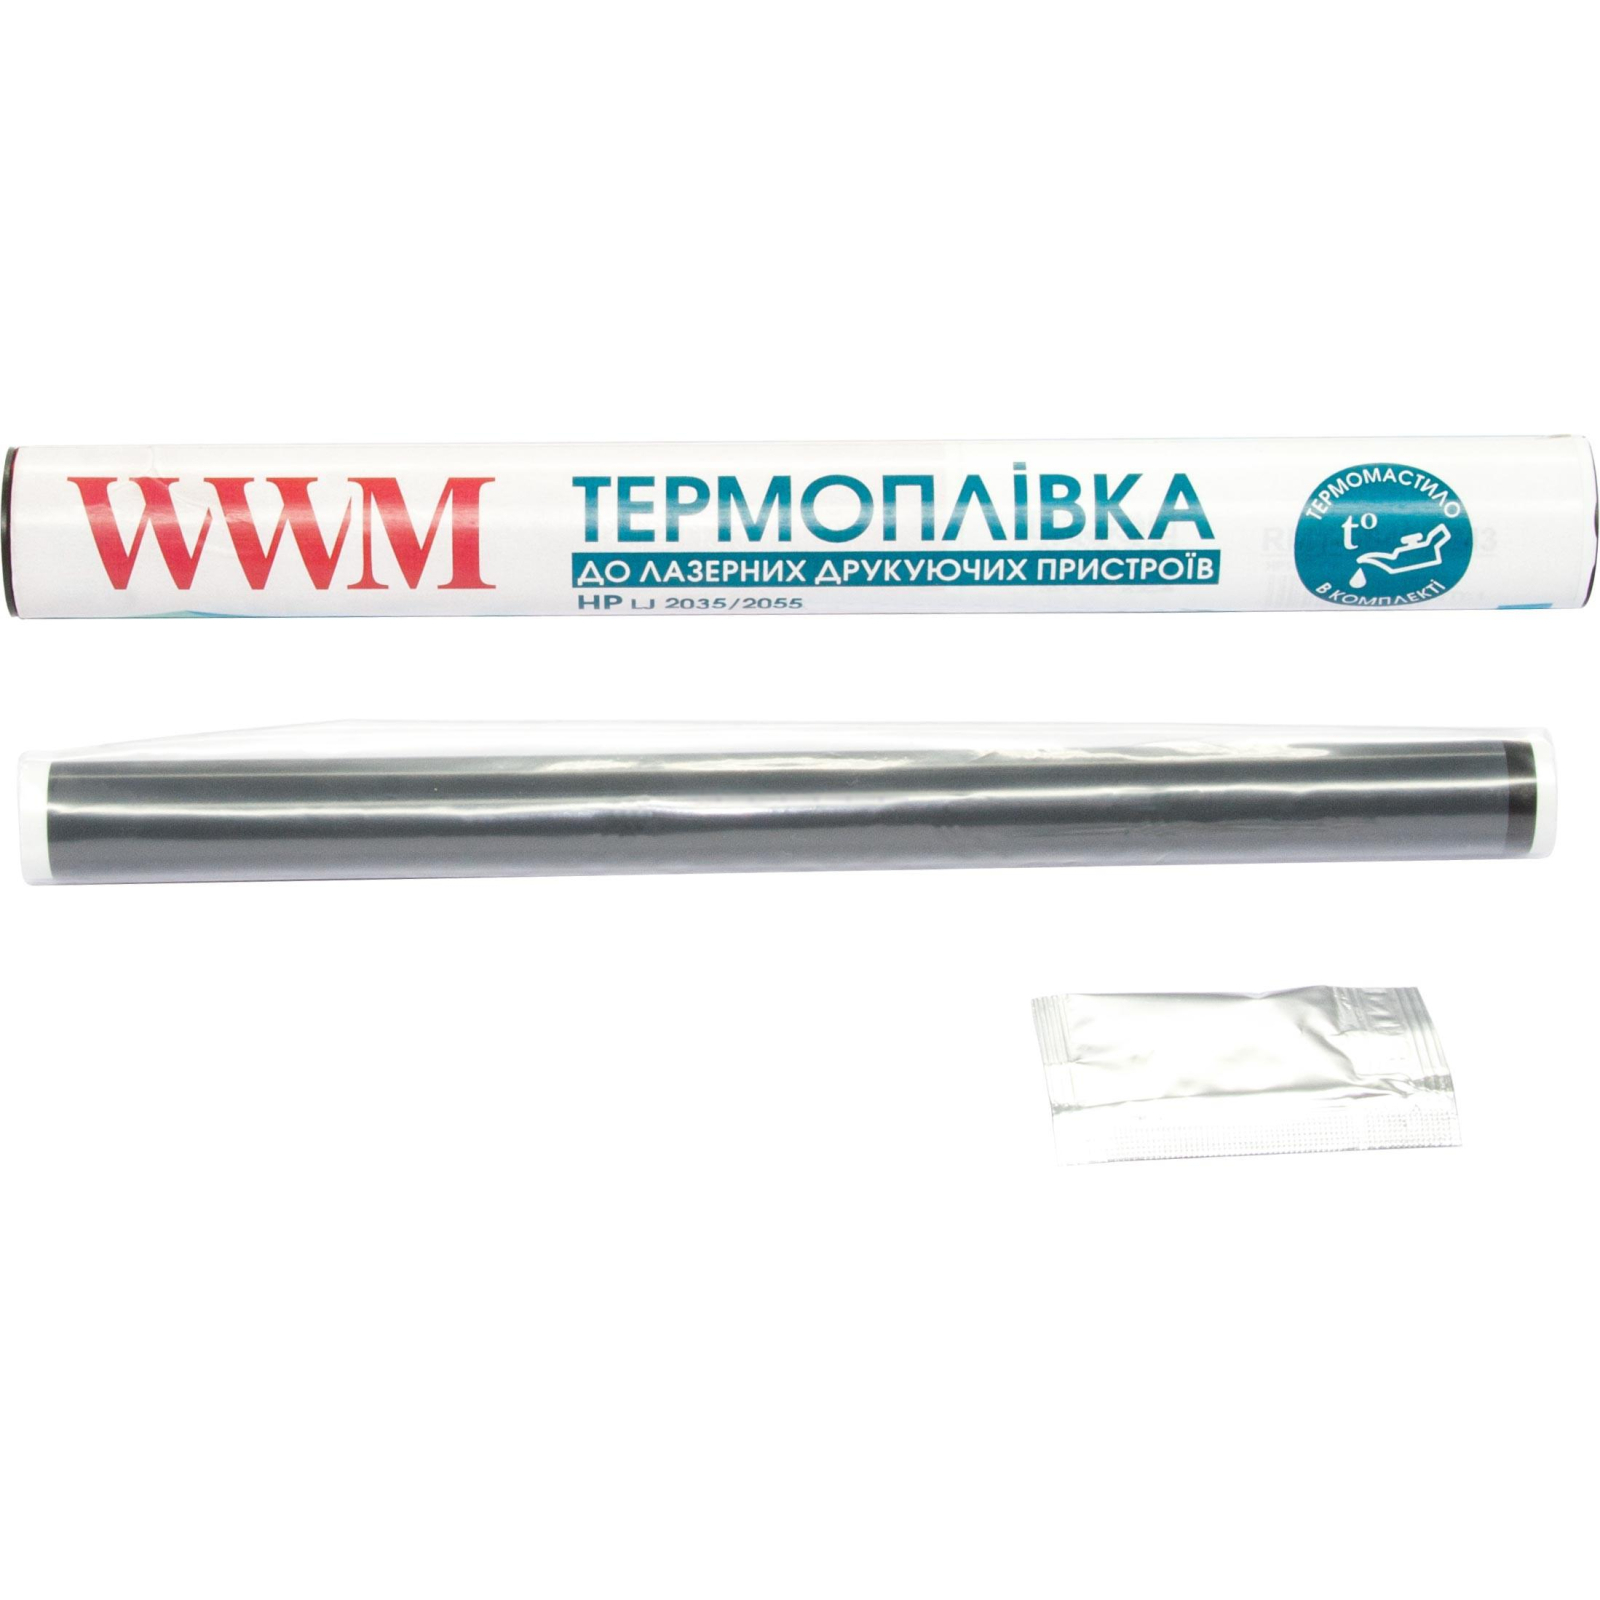 Термопленка WWM HP LJ P2035/P2055 смазка в комплекте (WWMFilm-2035HQ)